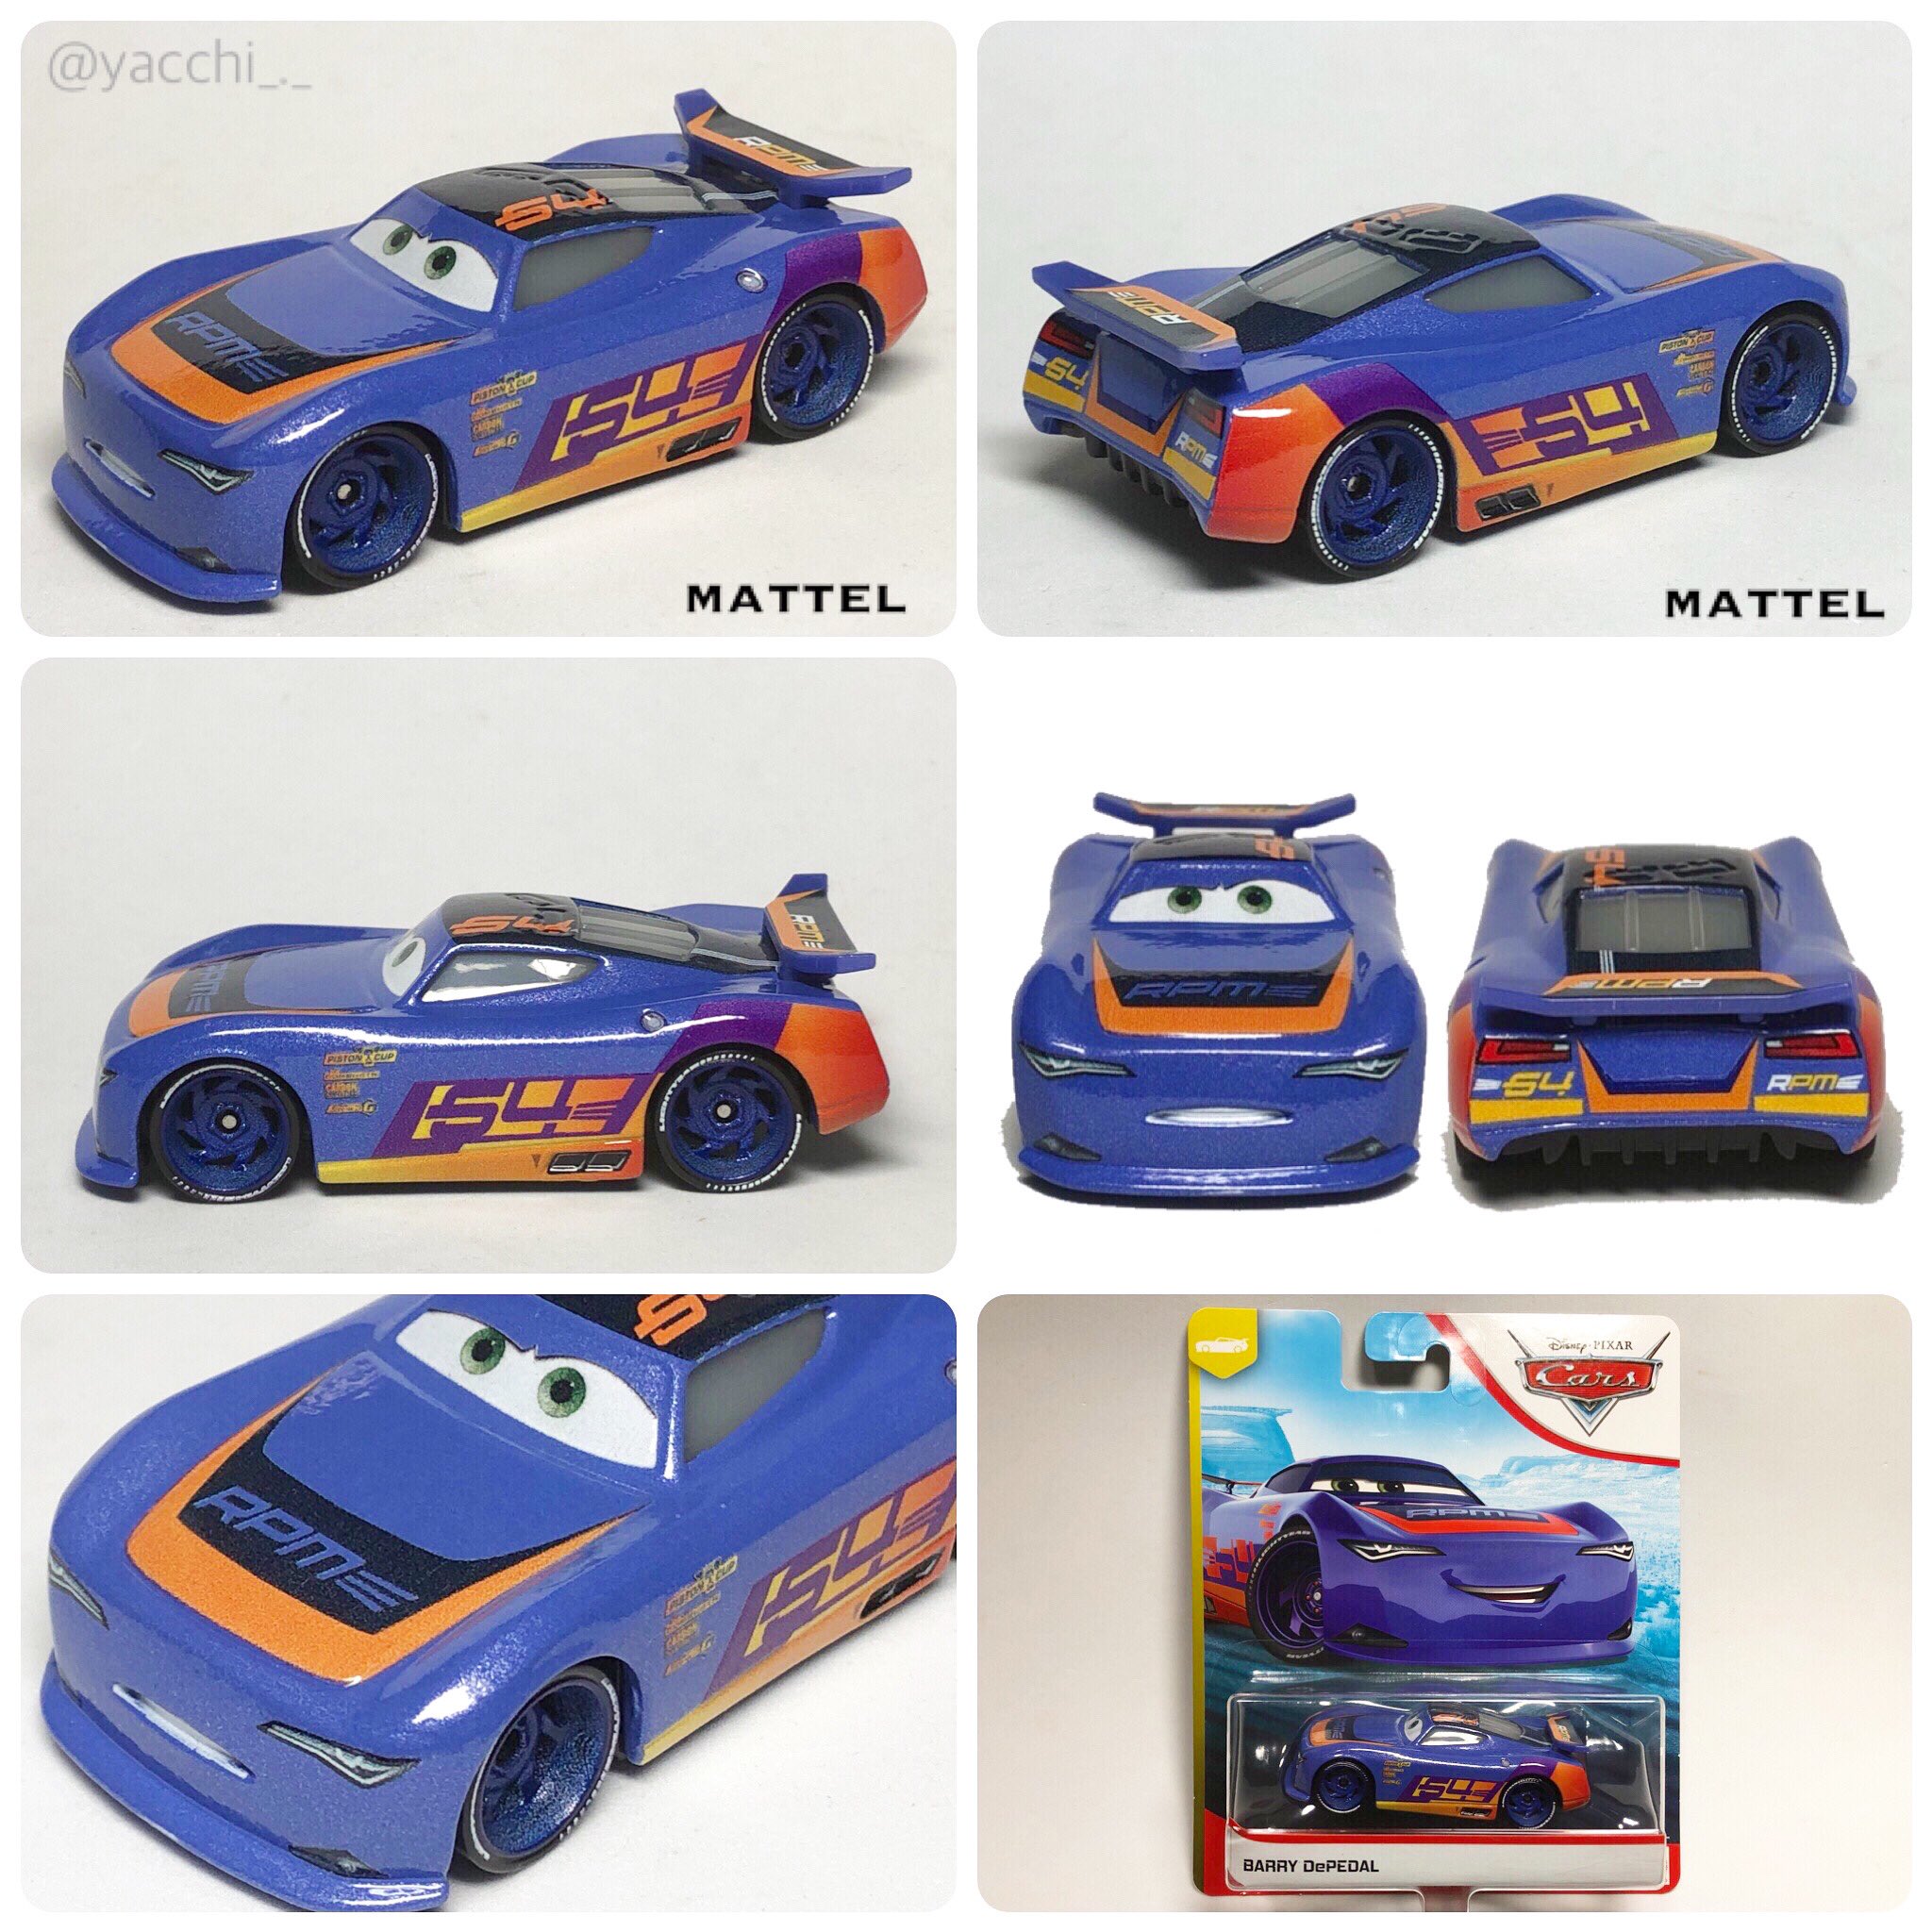 Yacchi ミニカー垢 Mattel Cars3 Rpm 64 Barry Depedal カーズ カーズ3 マテル バリーディペダル ディズニー ピクサー Rpm Barrydepedal Disney Pixar Mattel ミニカー カーナンバー違い教えてくださってありがとうございます 再投稿